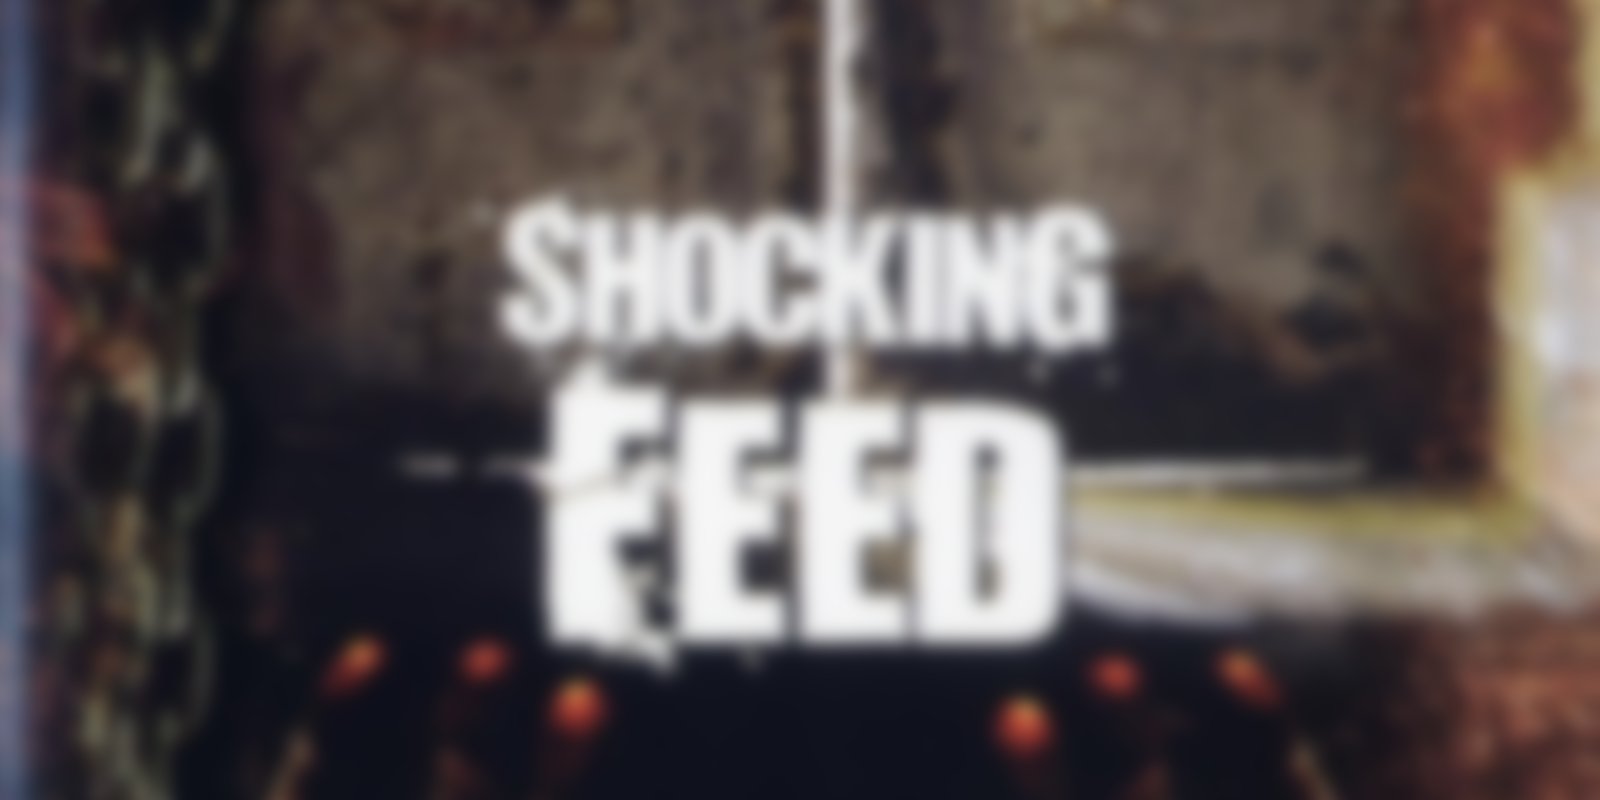 Live Feed - Shocking Feed